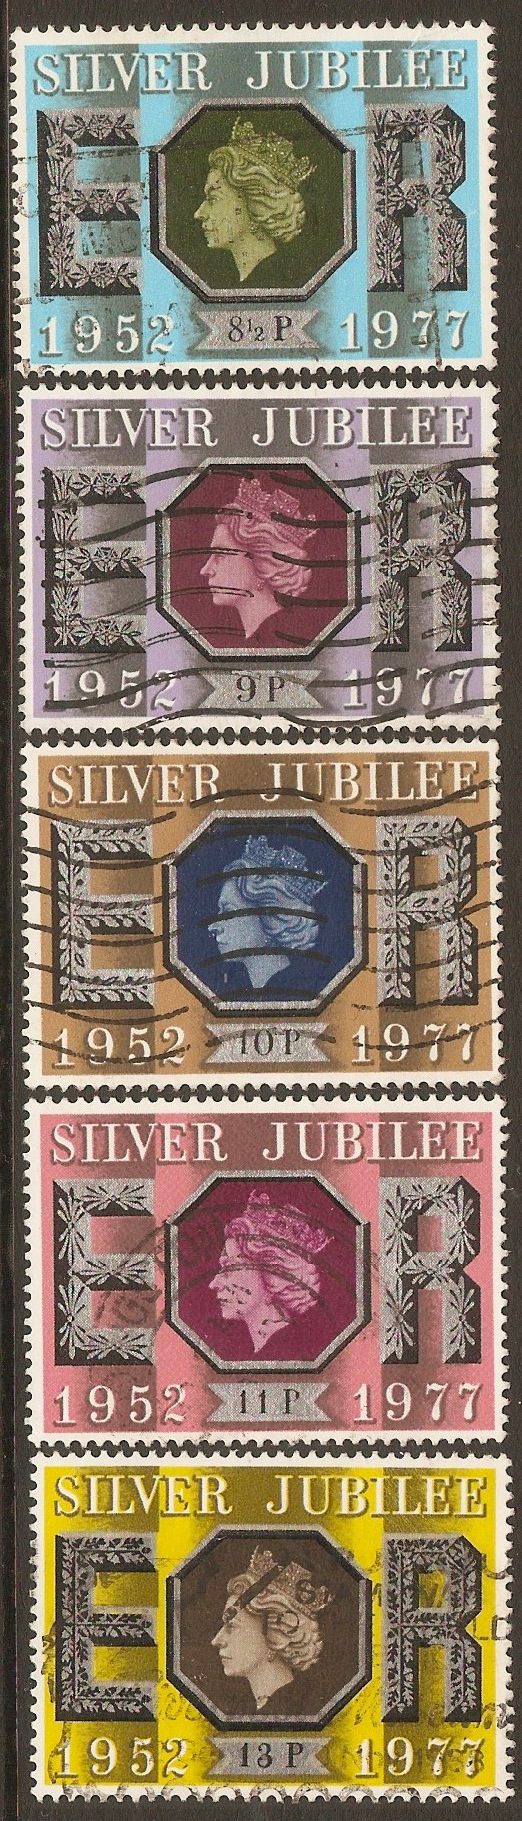 Great Britain 1977 Silver Jubilee set. SG1033-SG1037.